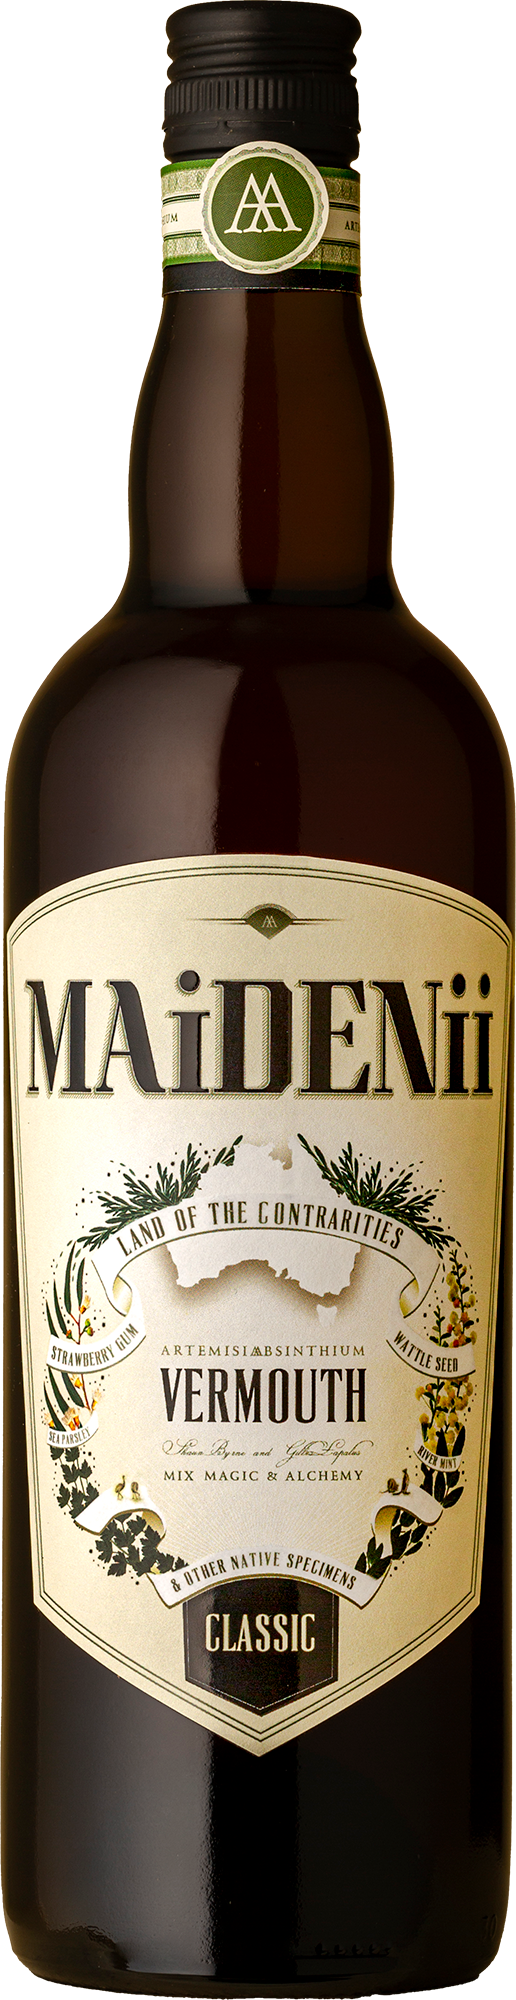 Maidenii - Classic Vermouth 750mL Not Wine